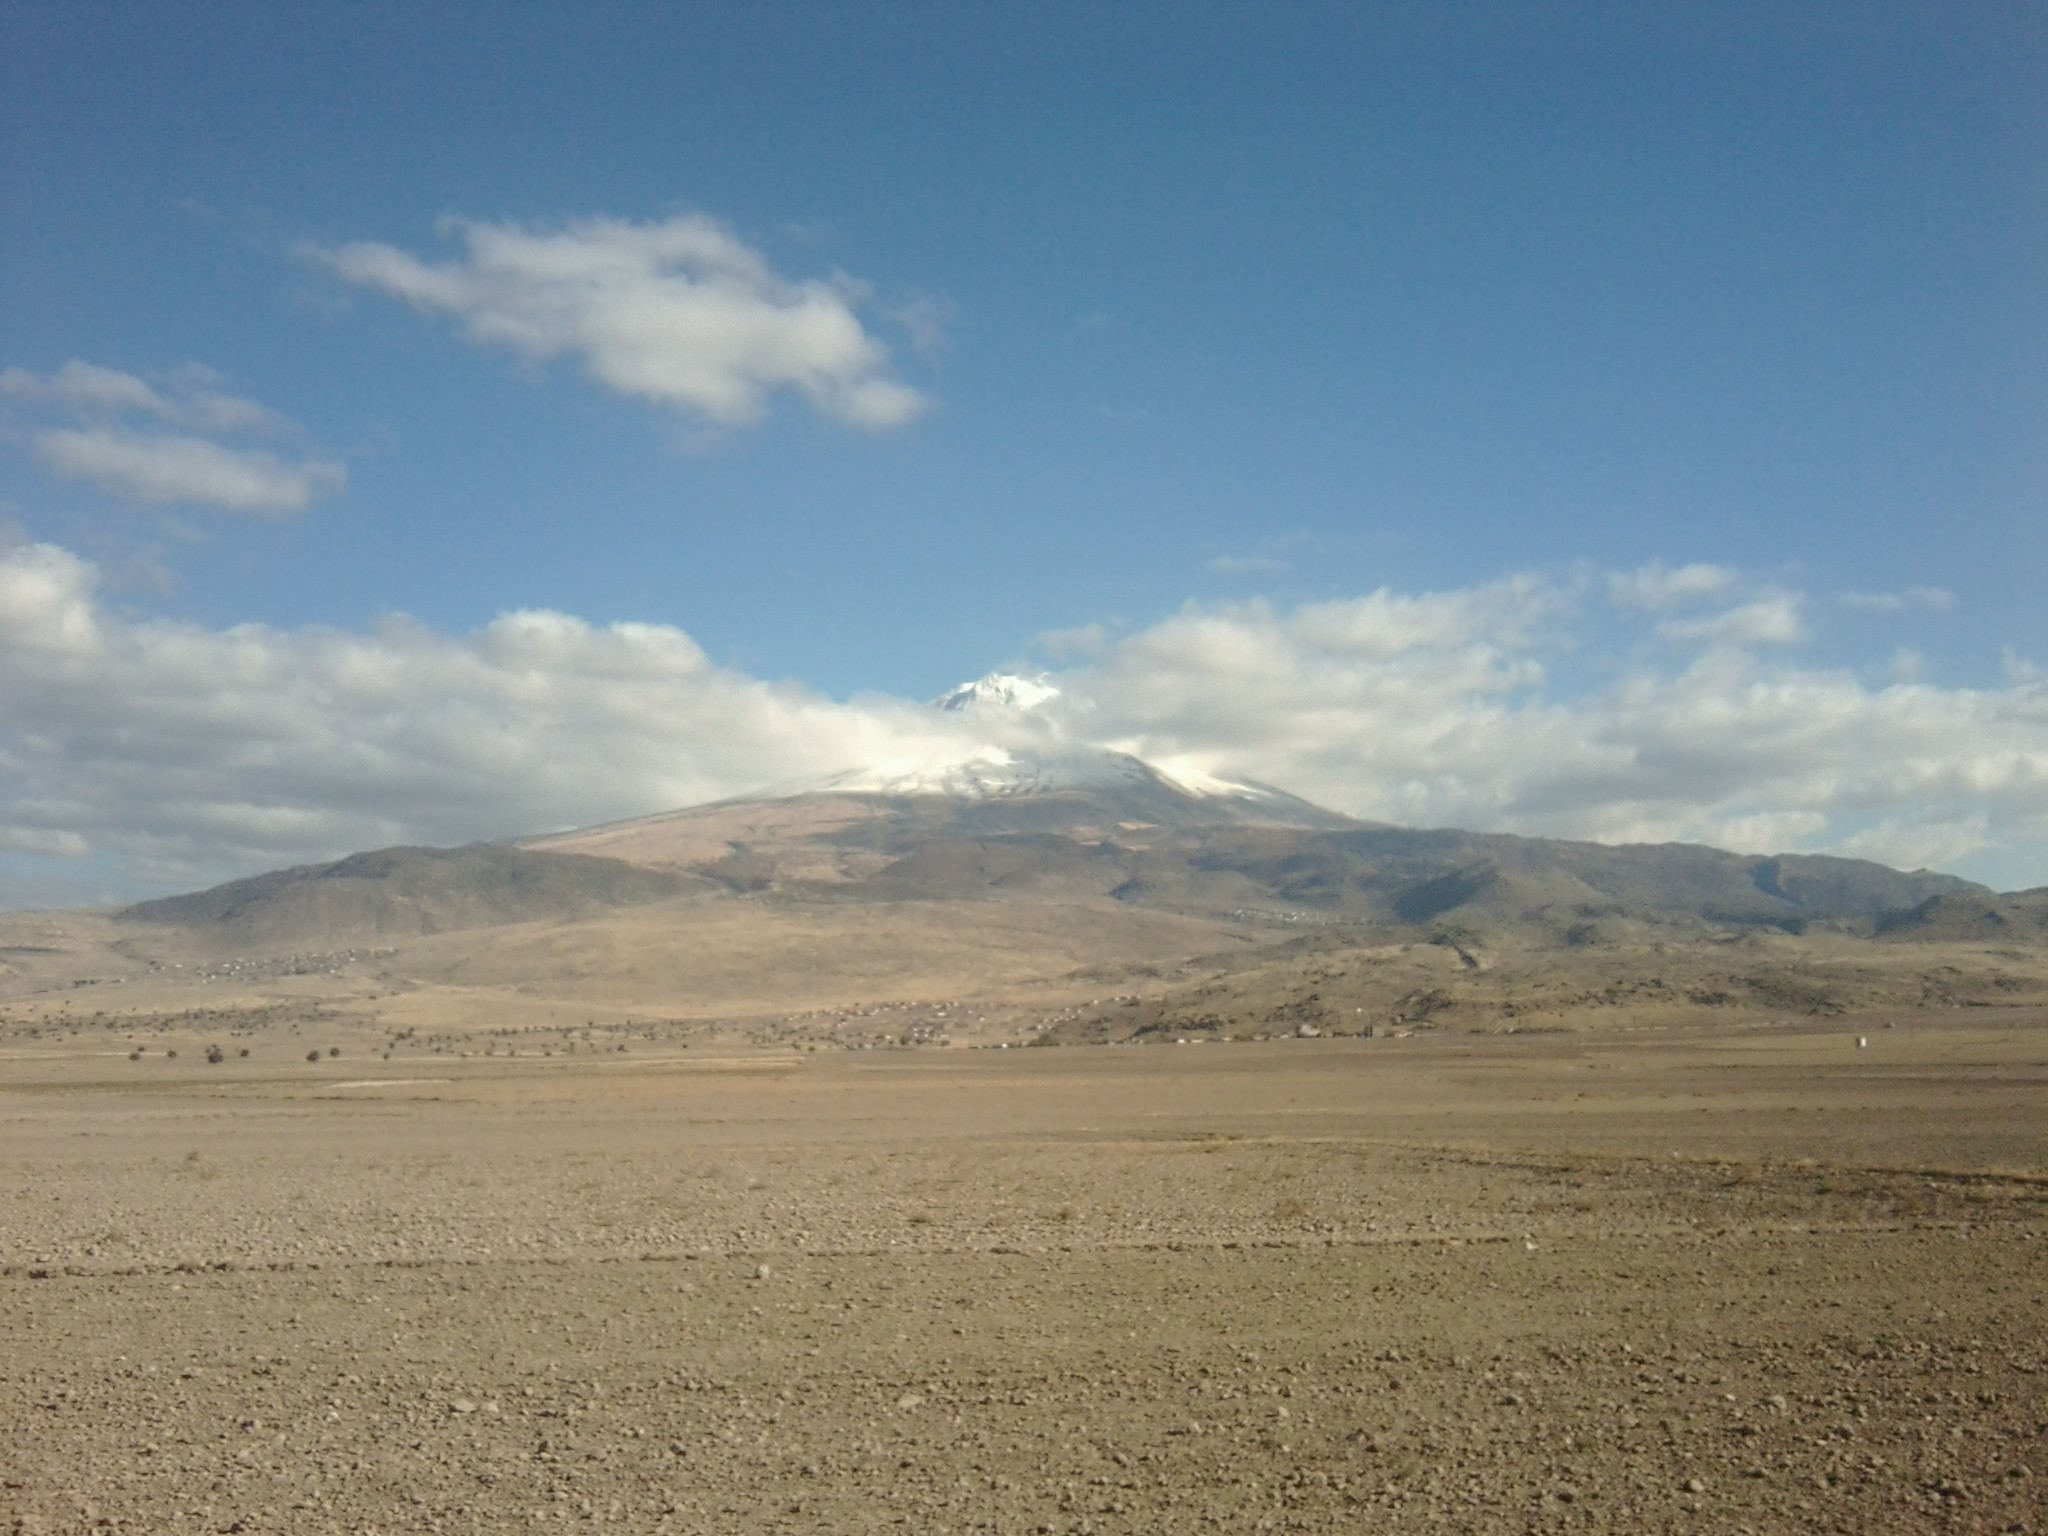 General 2048x1536 landscape desert mountains